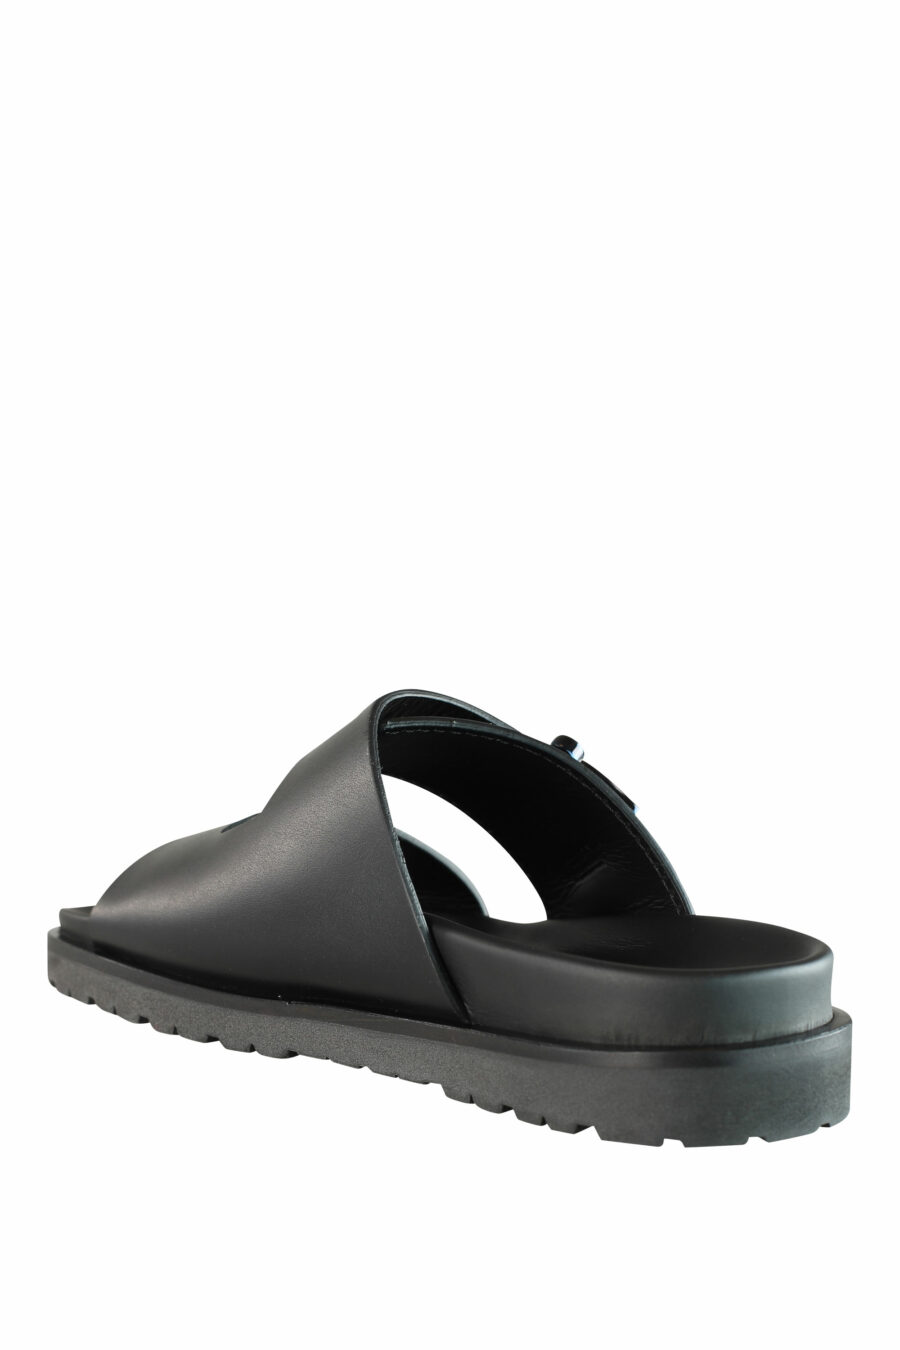 Black sandals with monochrome metal "D2" logo - IMG 1312